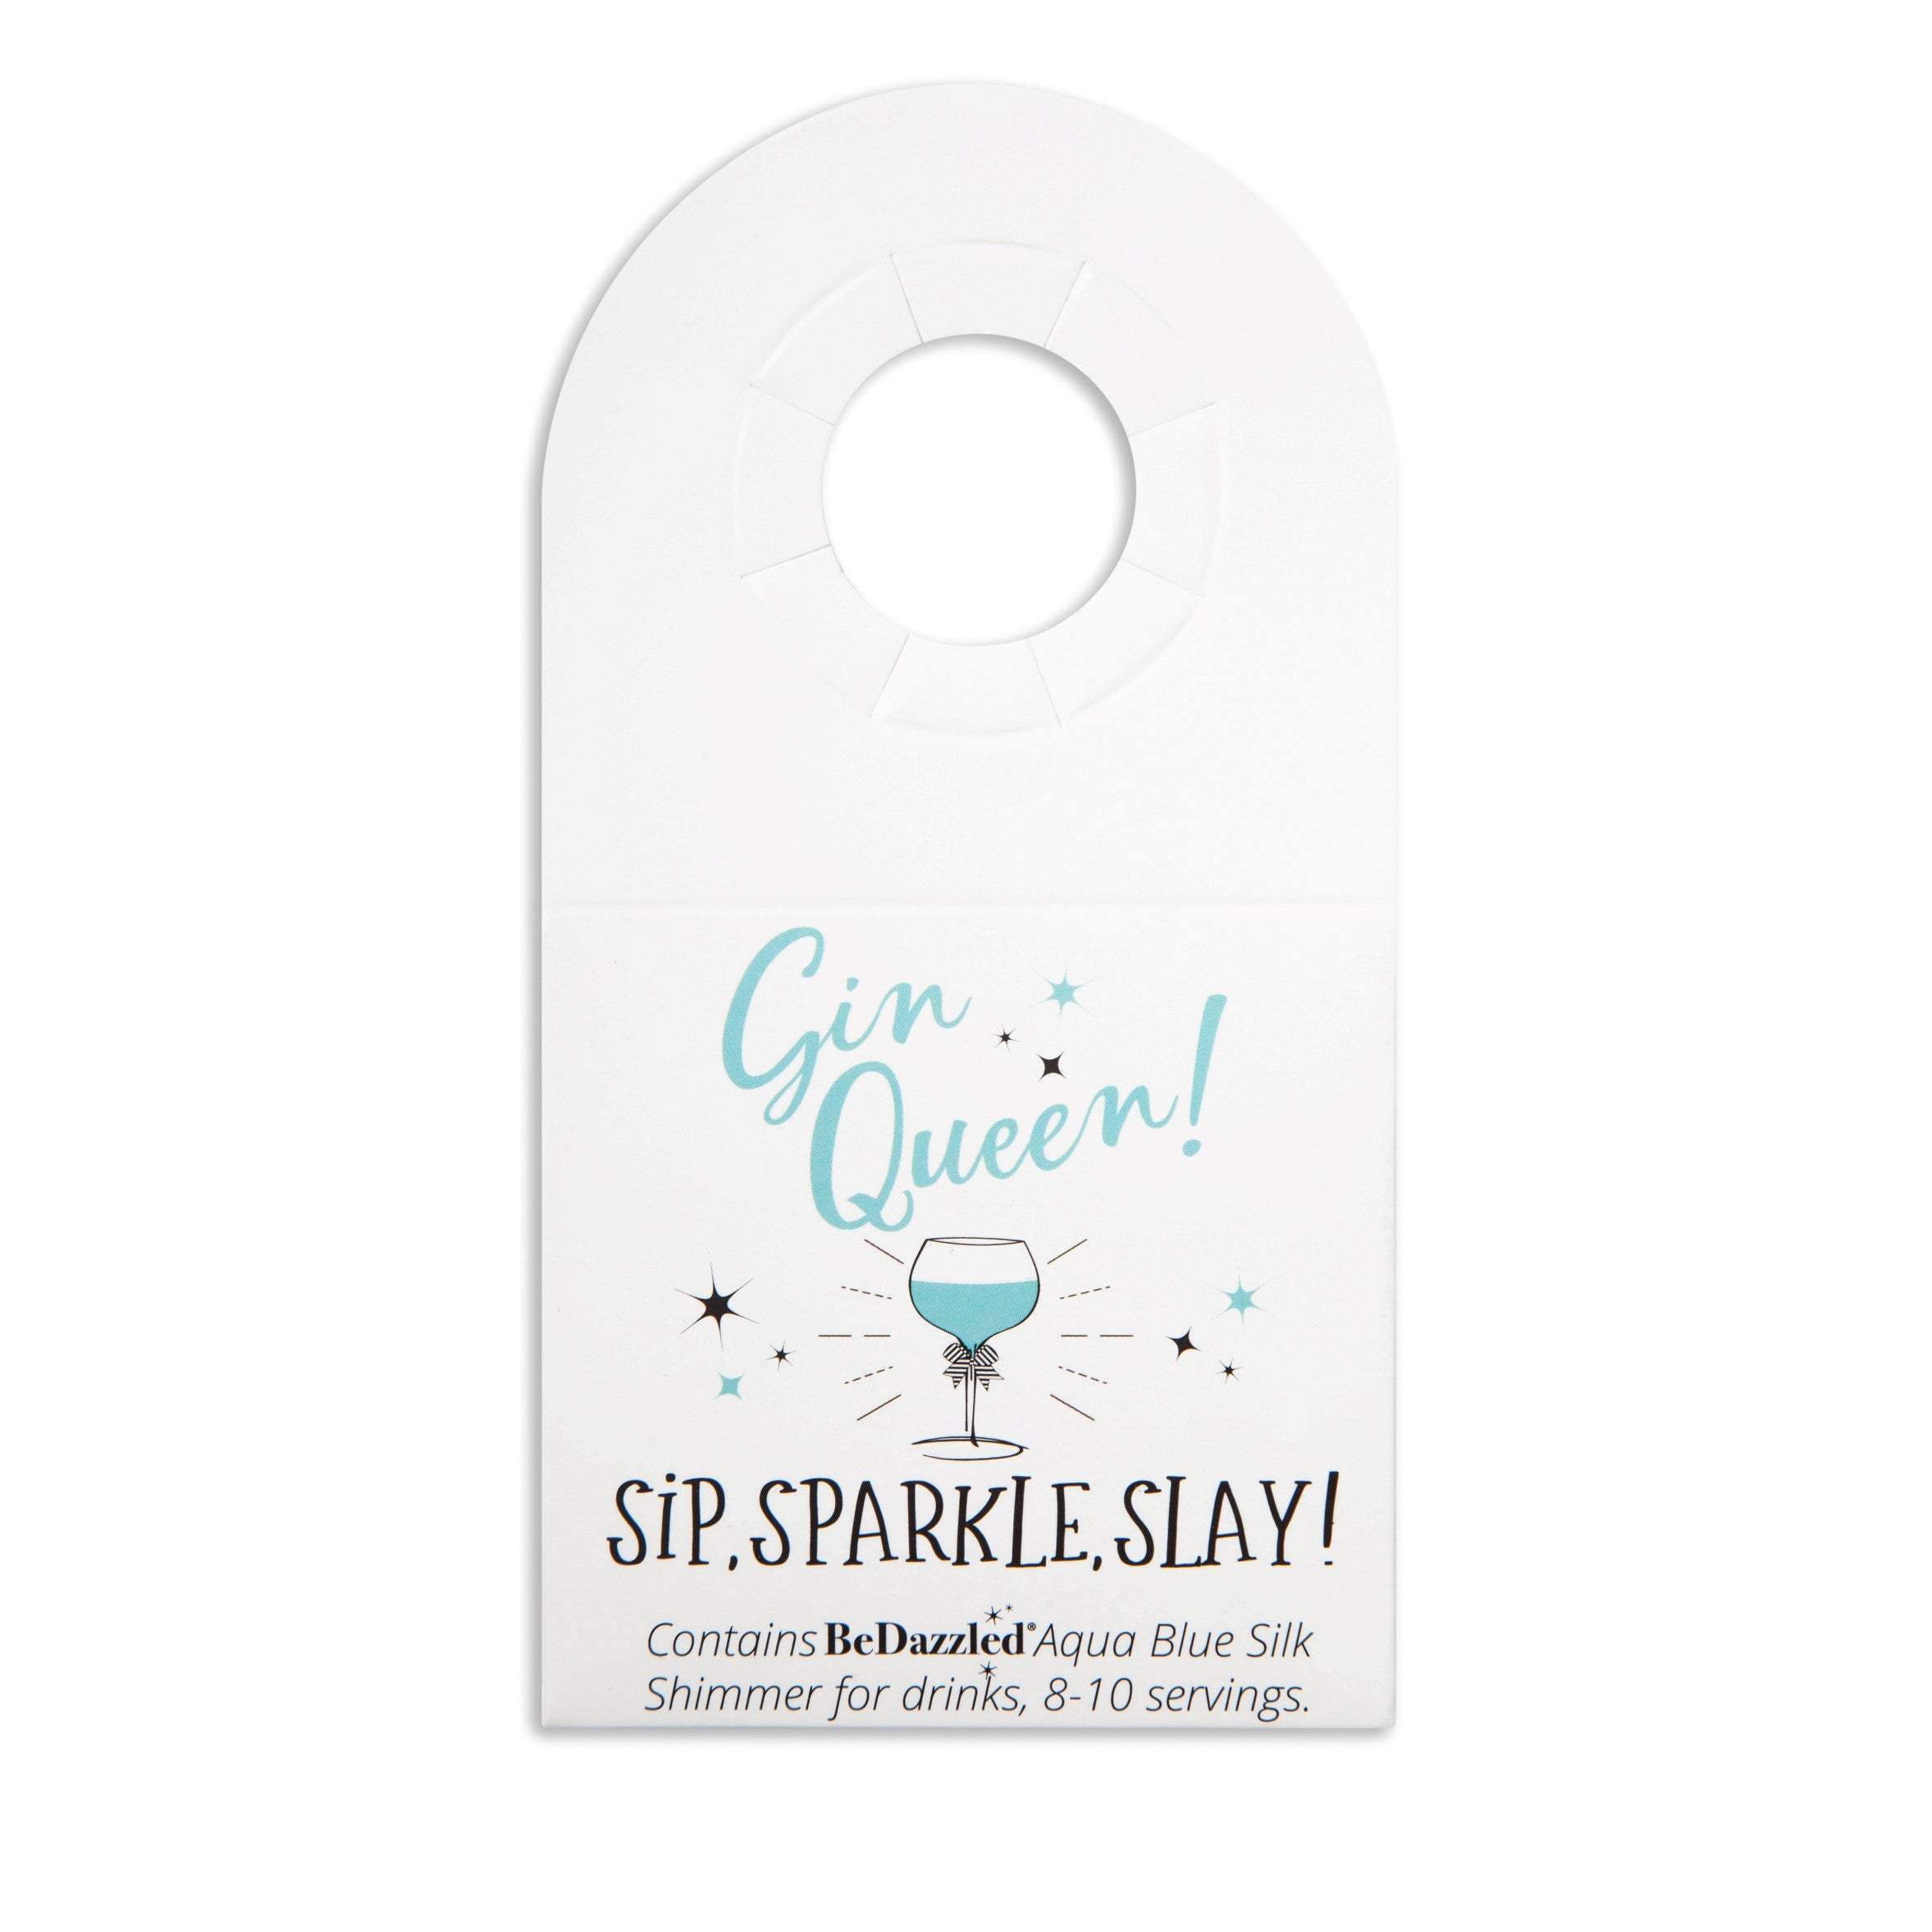 Gin Queen! Sip! Sparkle! Slay! - bottle neck gift tag AQUA BLUE shimmer